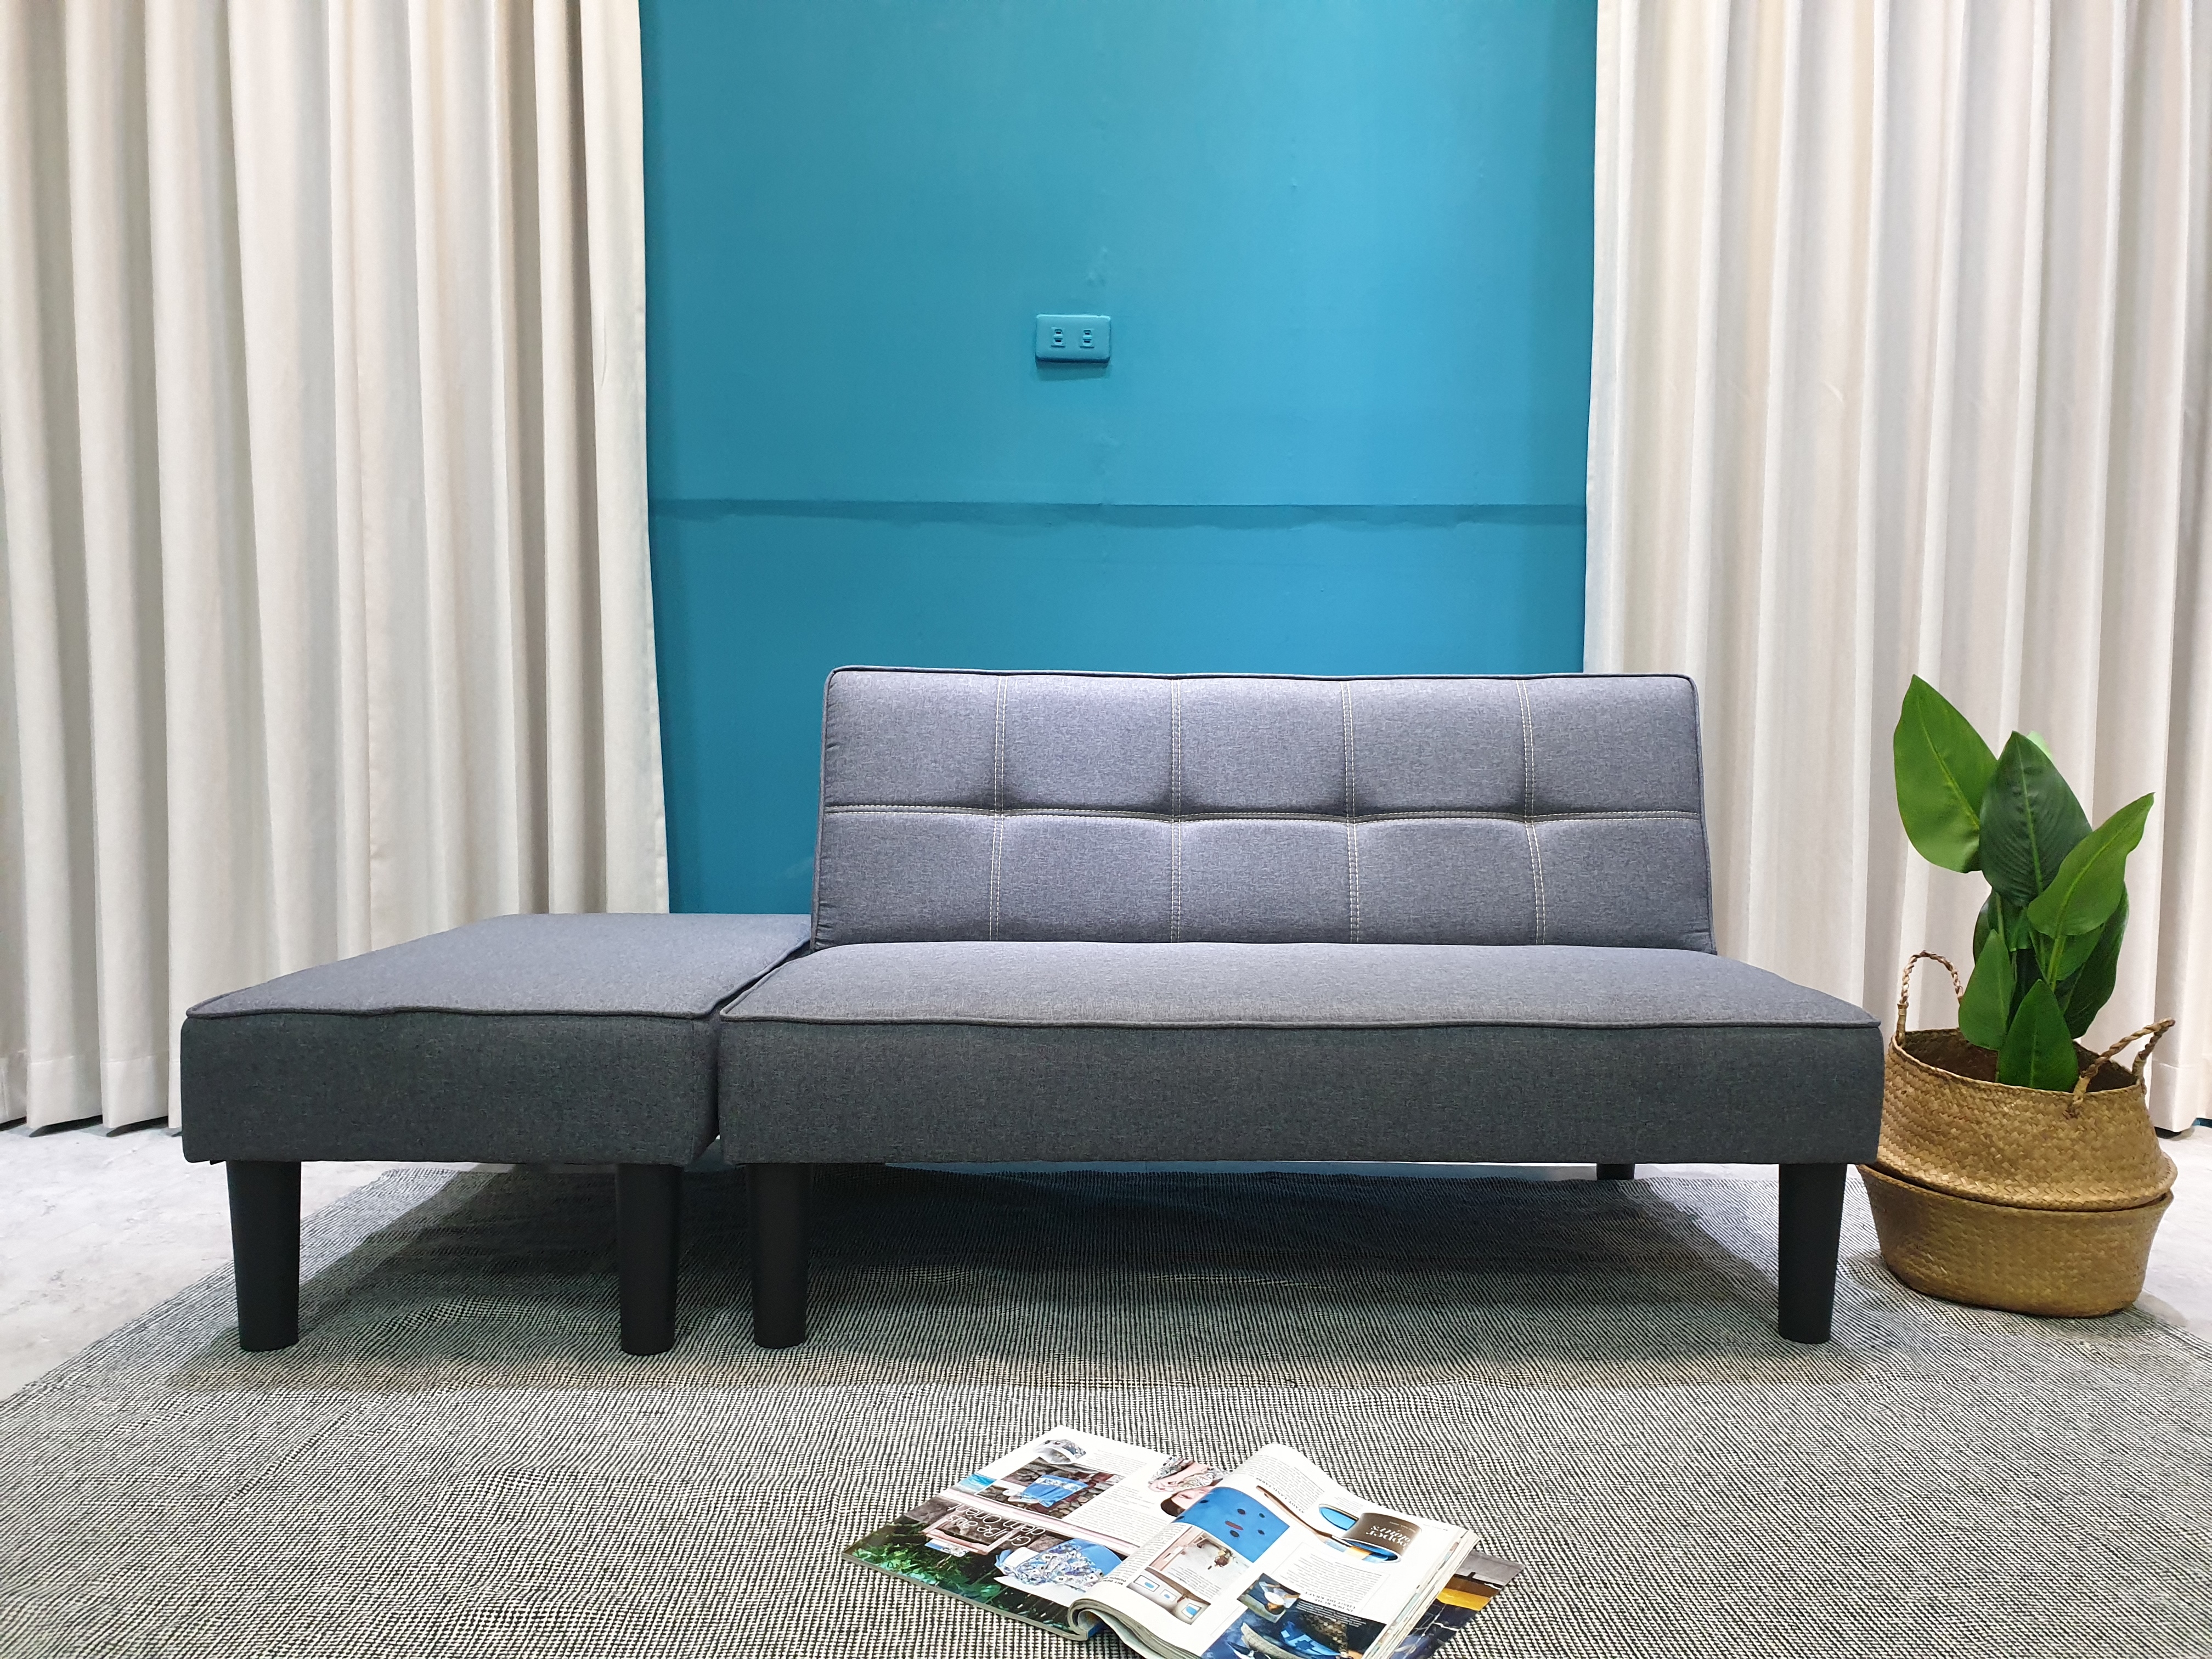 Sofa bed 3 trong 1 đa năng Juno sofa màu xám